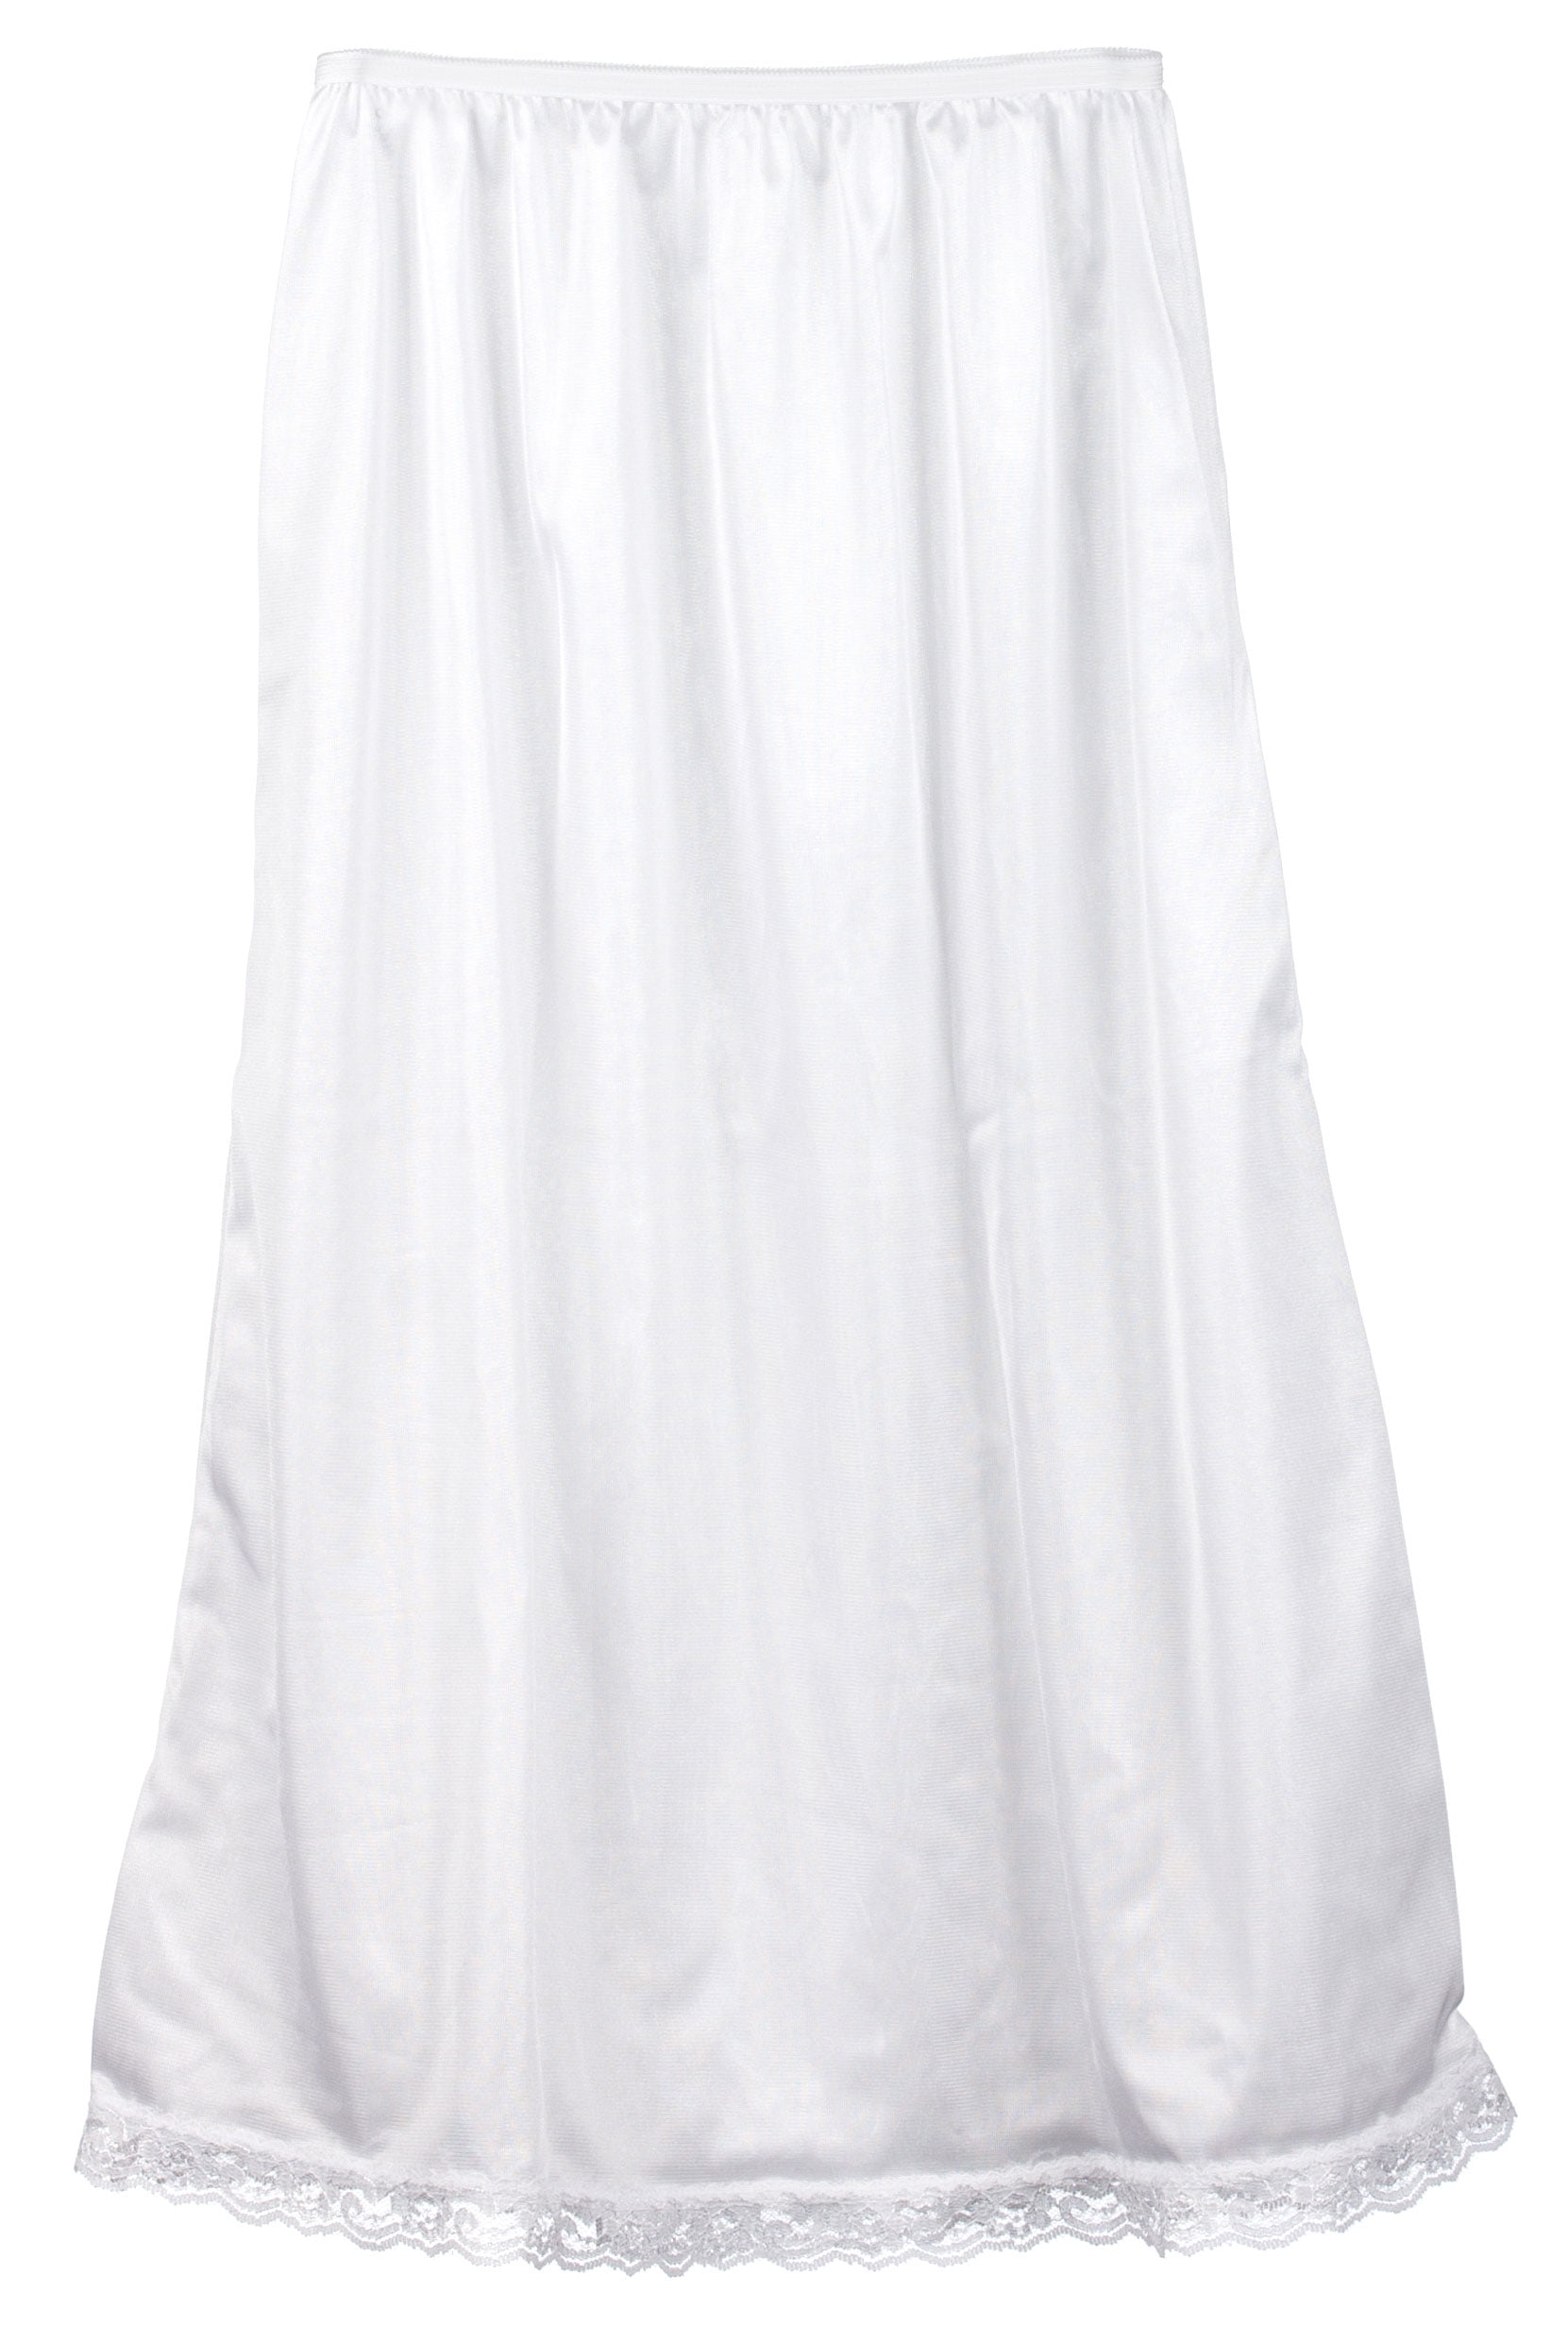 Collections Big Girls Lace Embellished White Bouffant Half Slip 7-14 I.C 